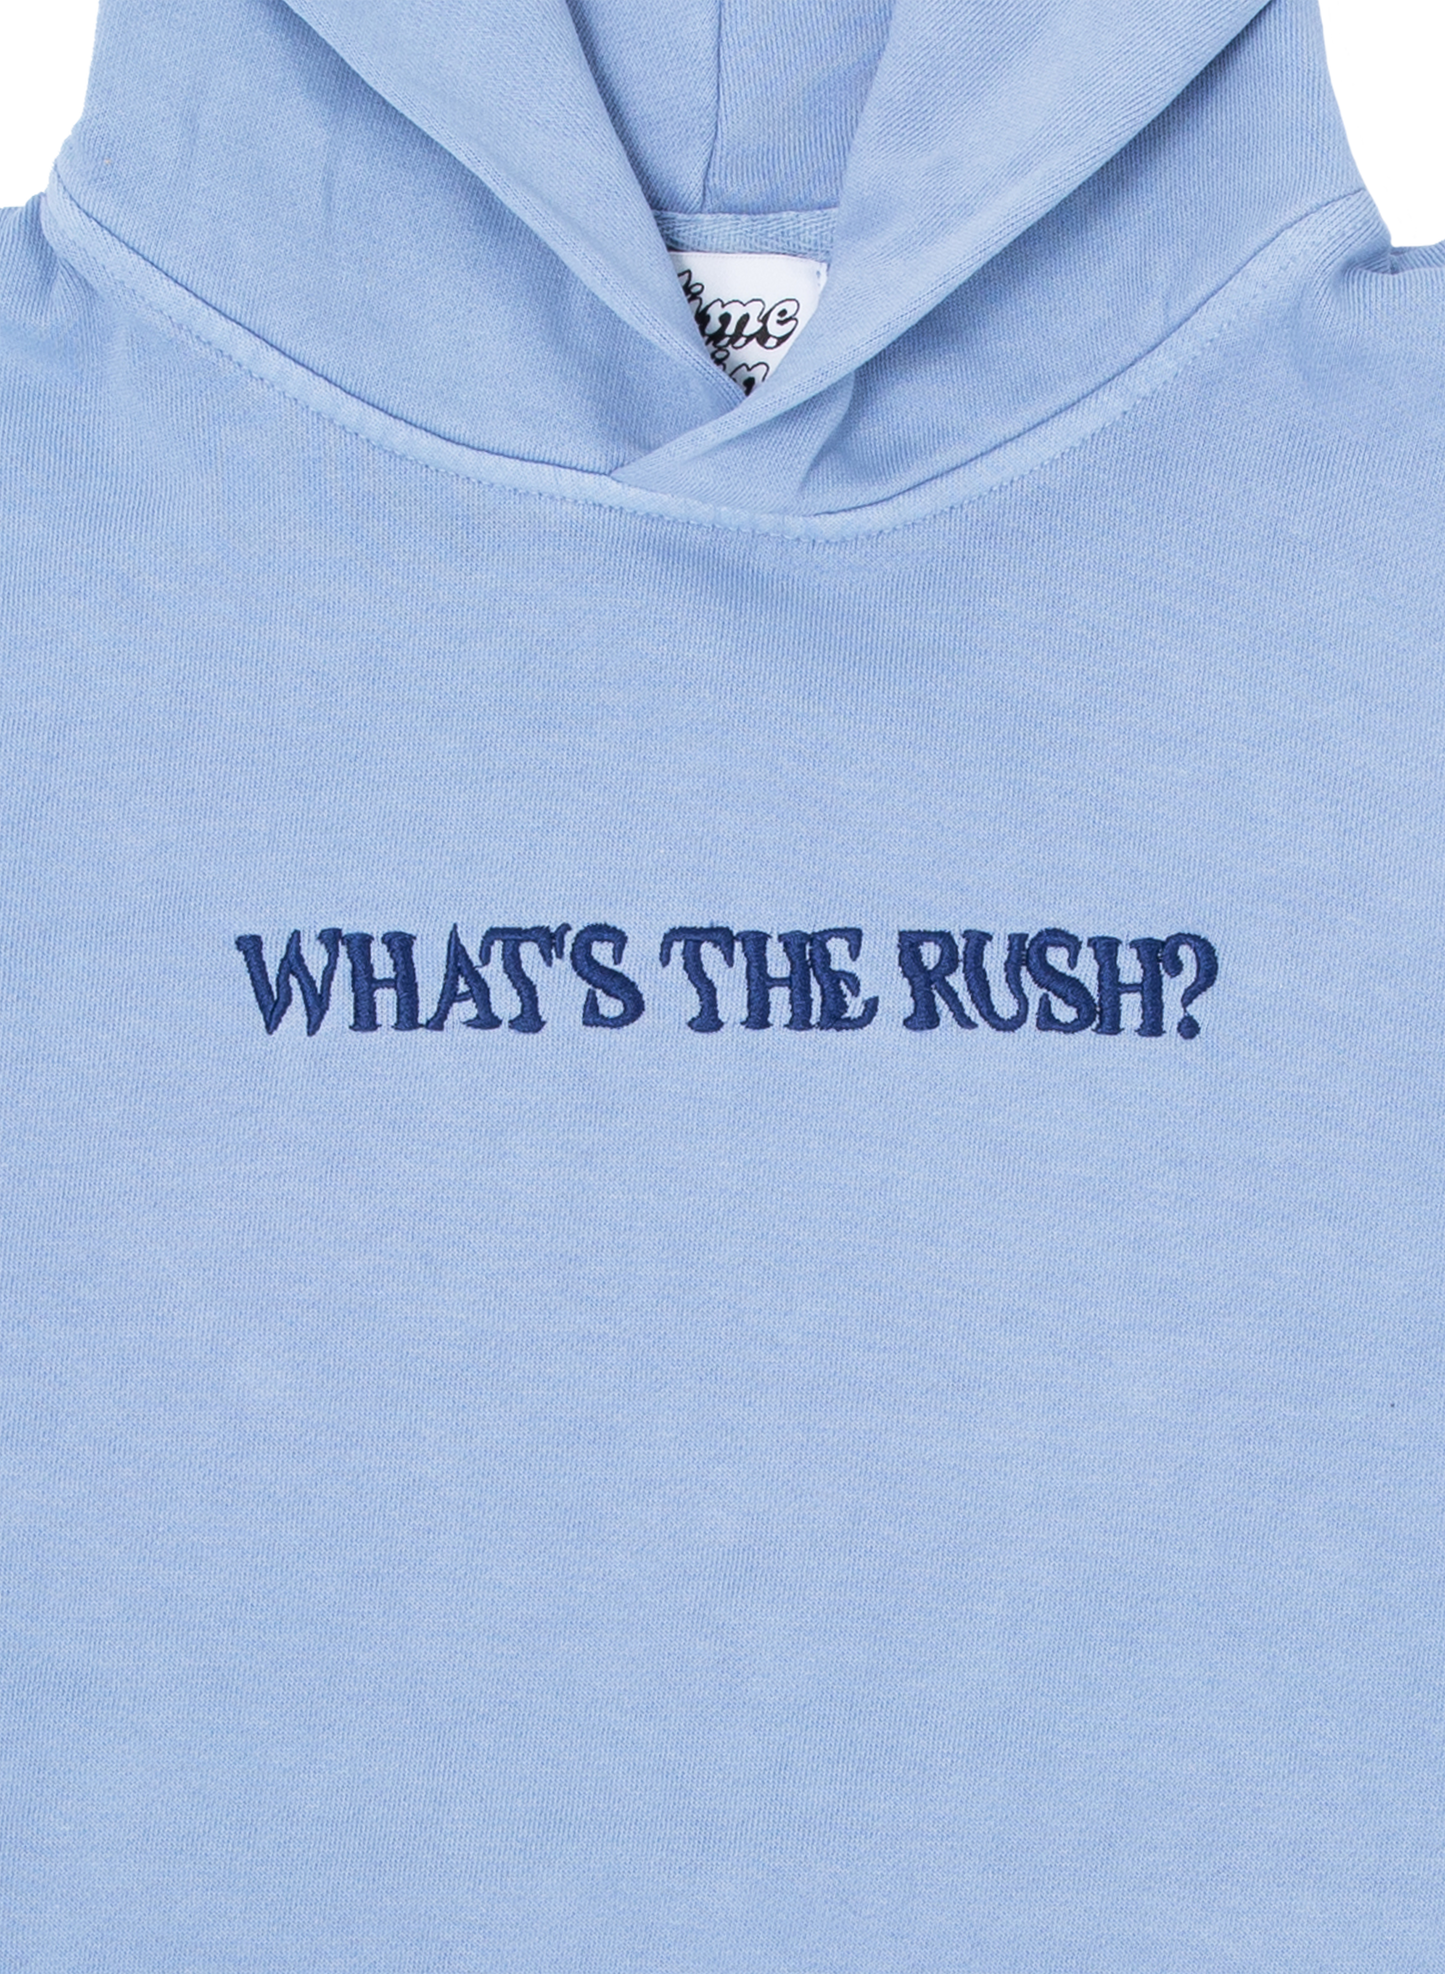 WHAT'S THE RUSH? HOODIE (LIGHT BLUE)